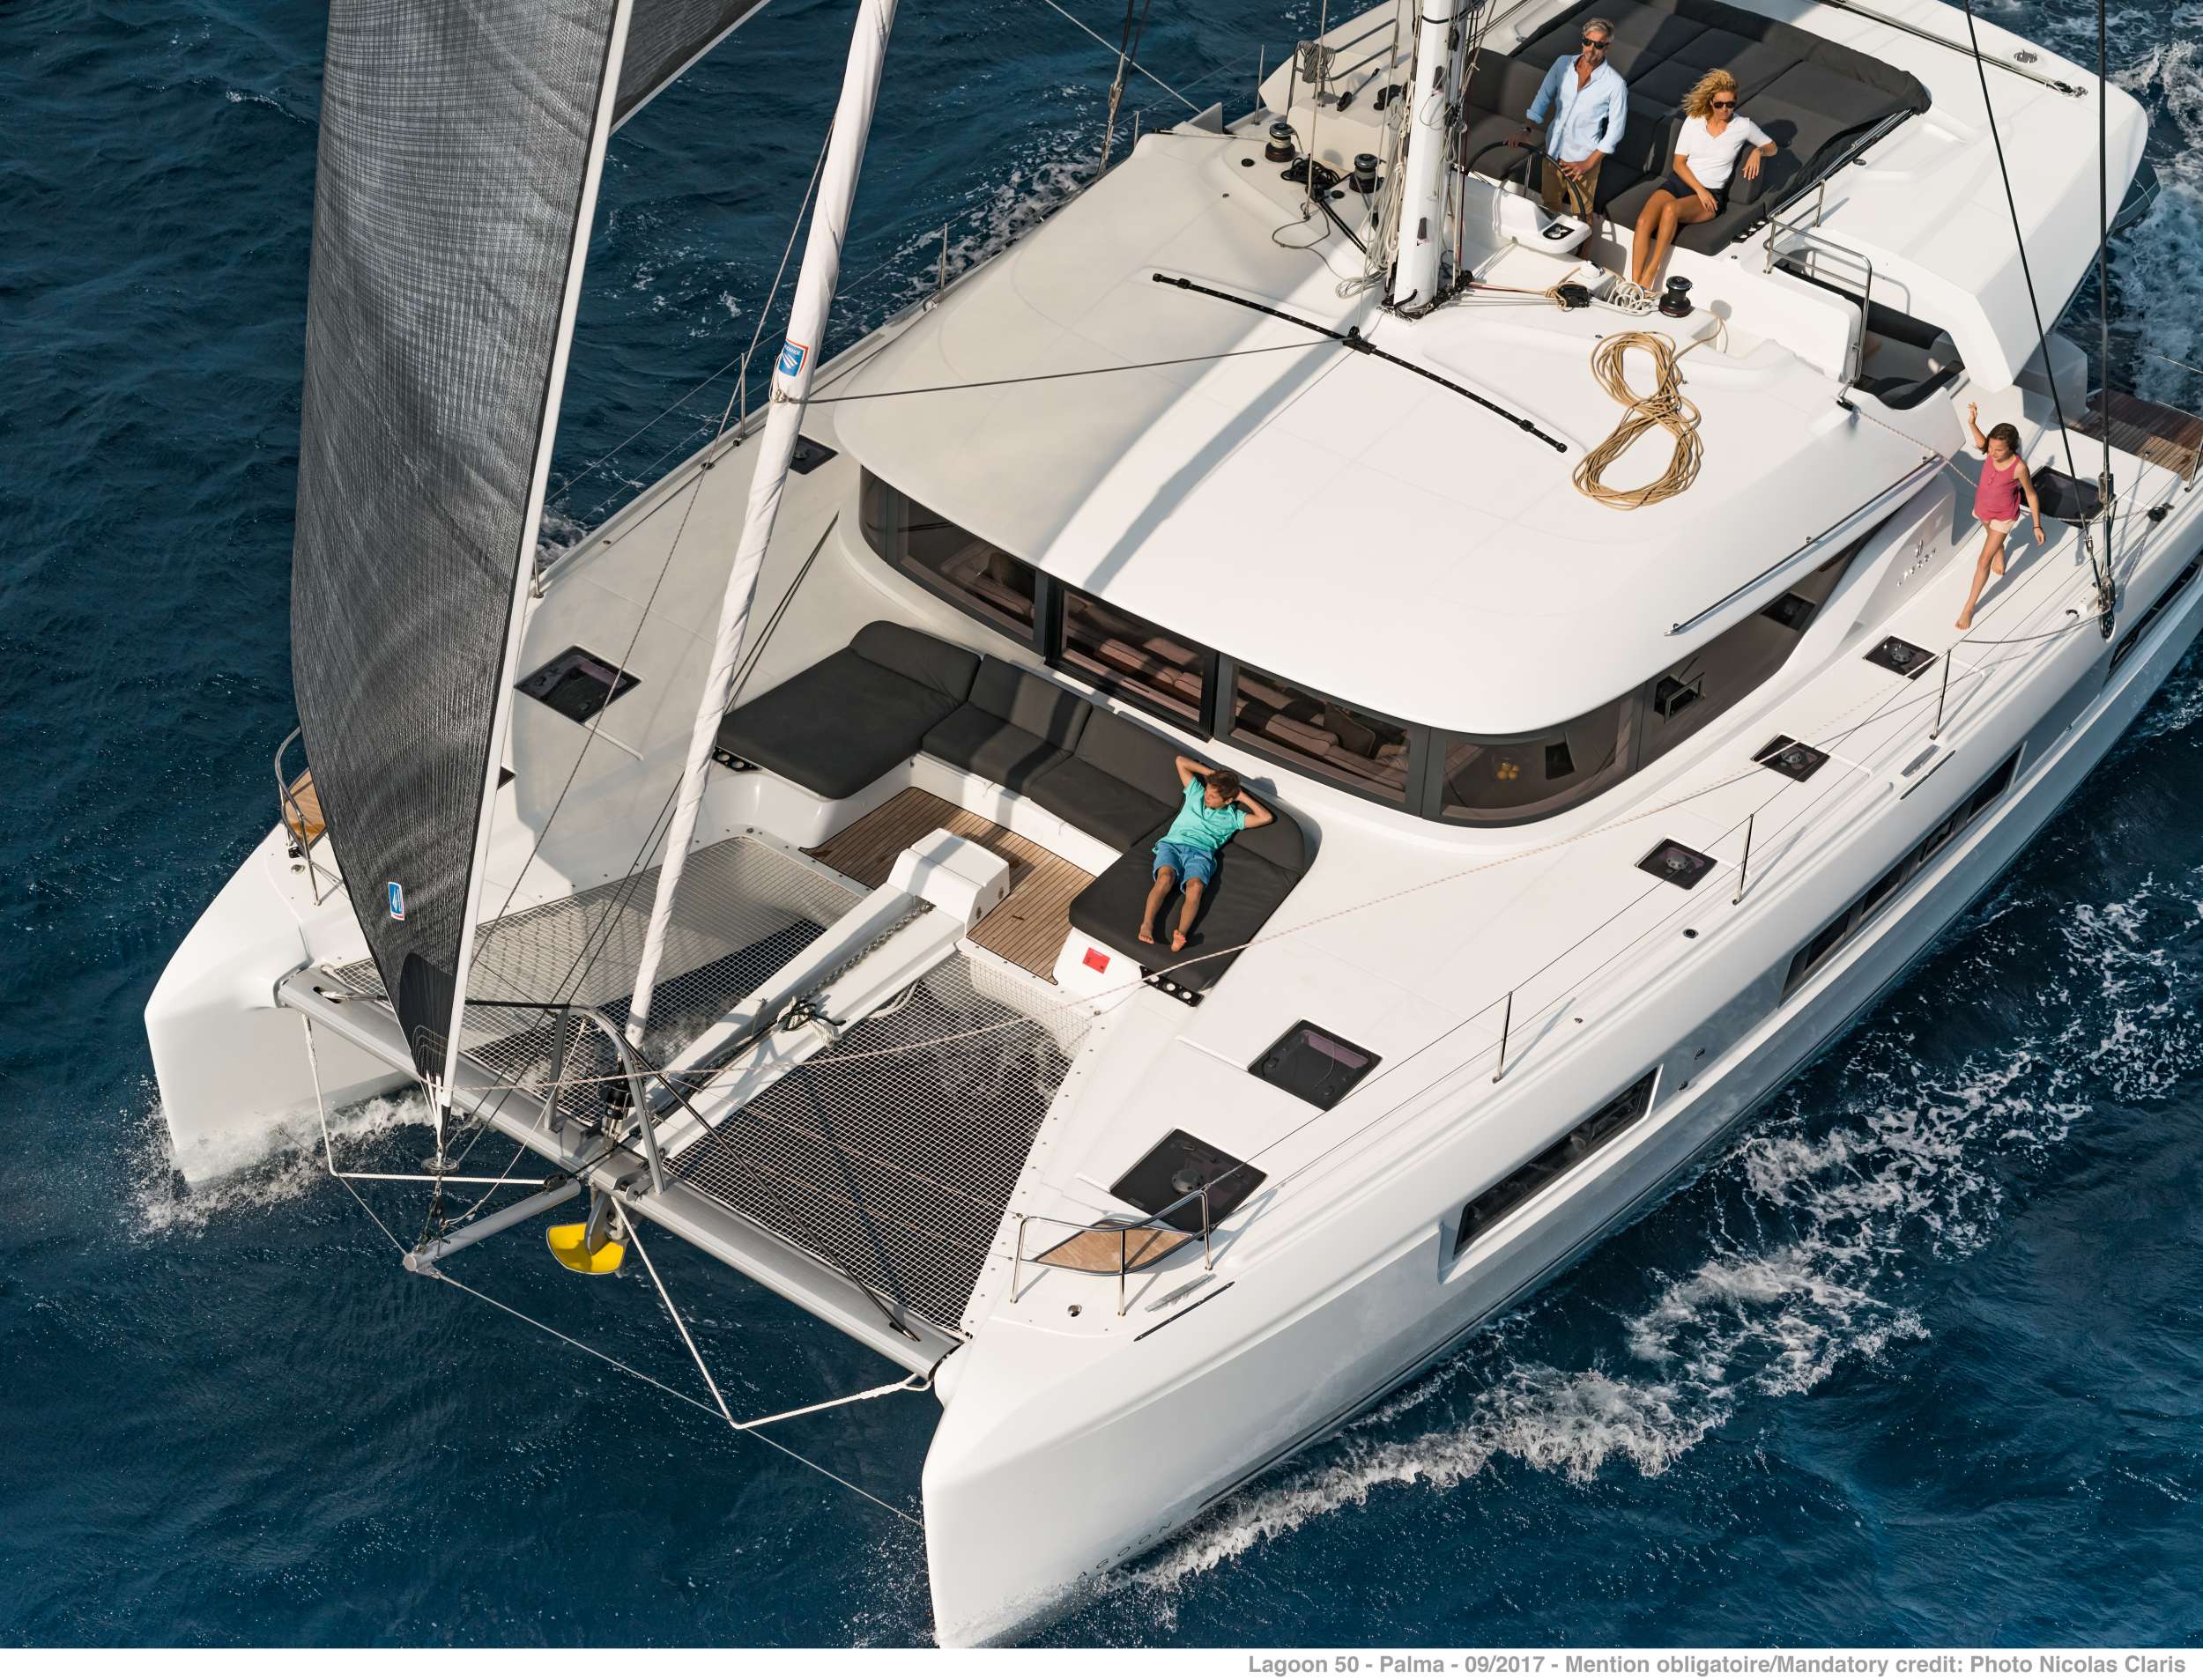 ONEIDA 2 - Yacht Charter Nafplion & Boat hire in Greece 6